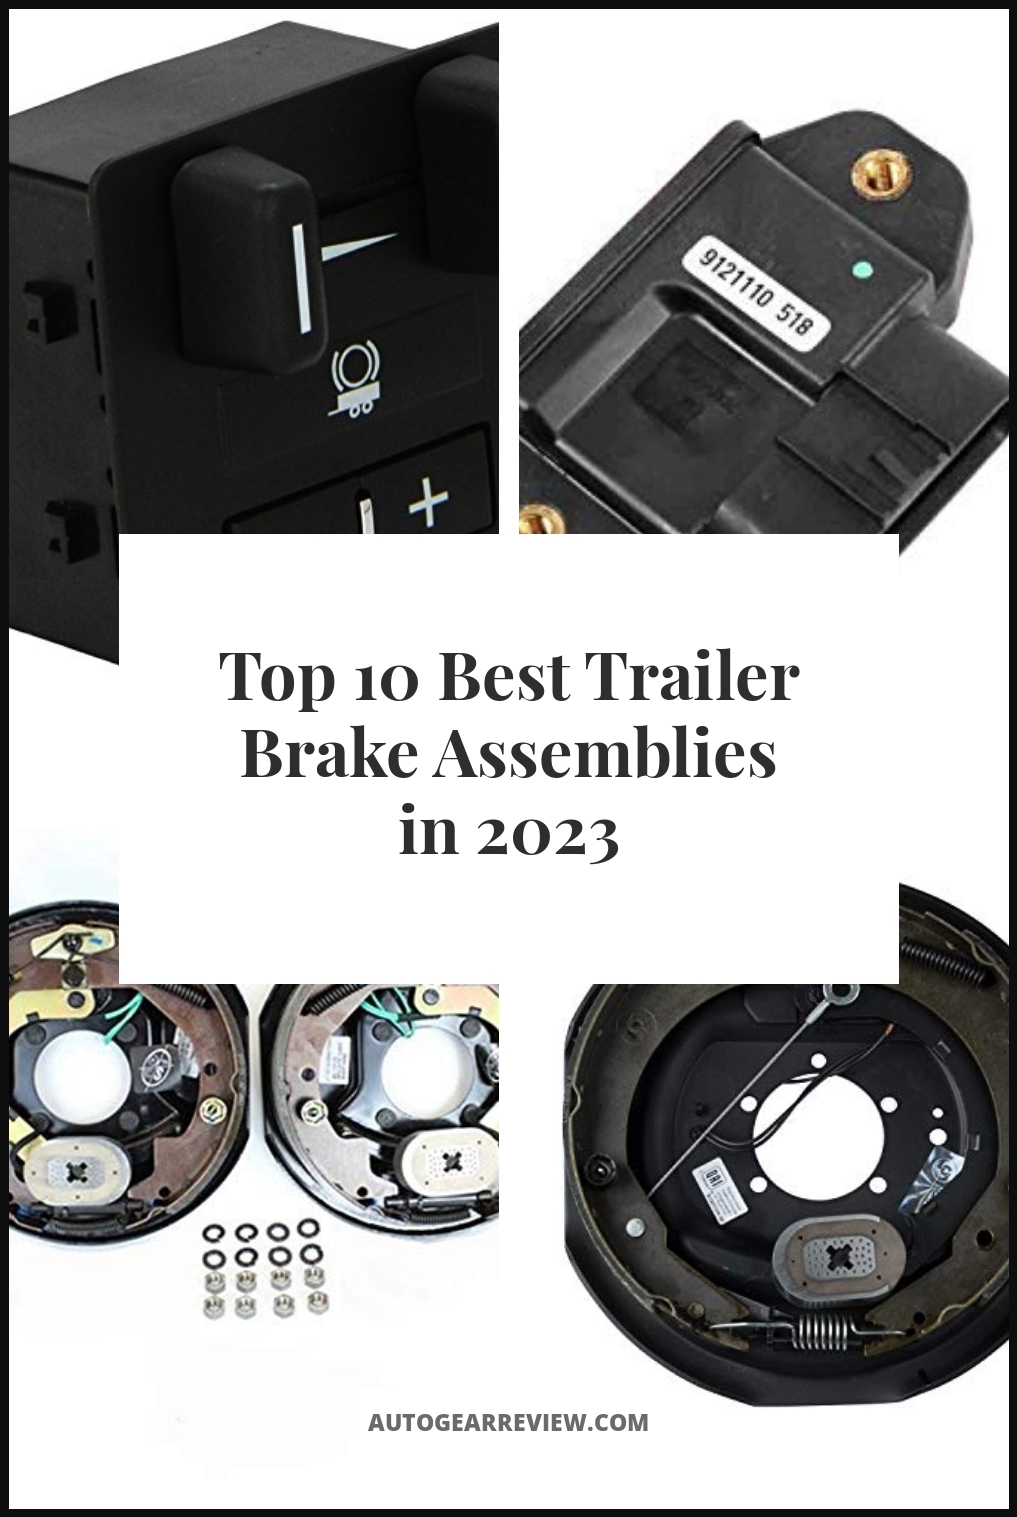 Best Trailer Brake Assemblies - Buying Guide